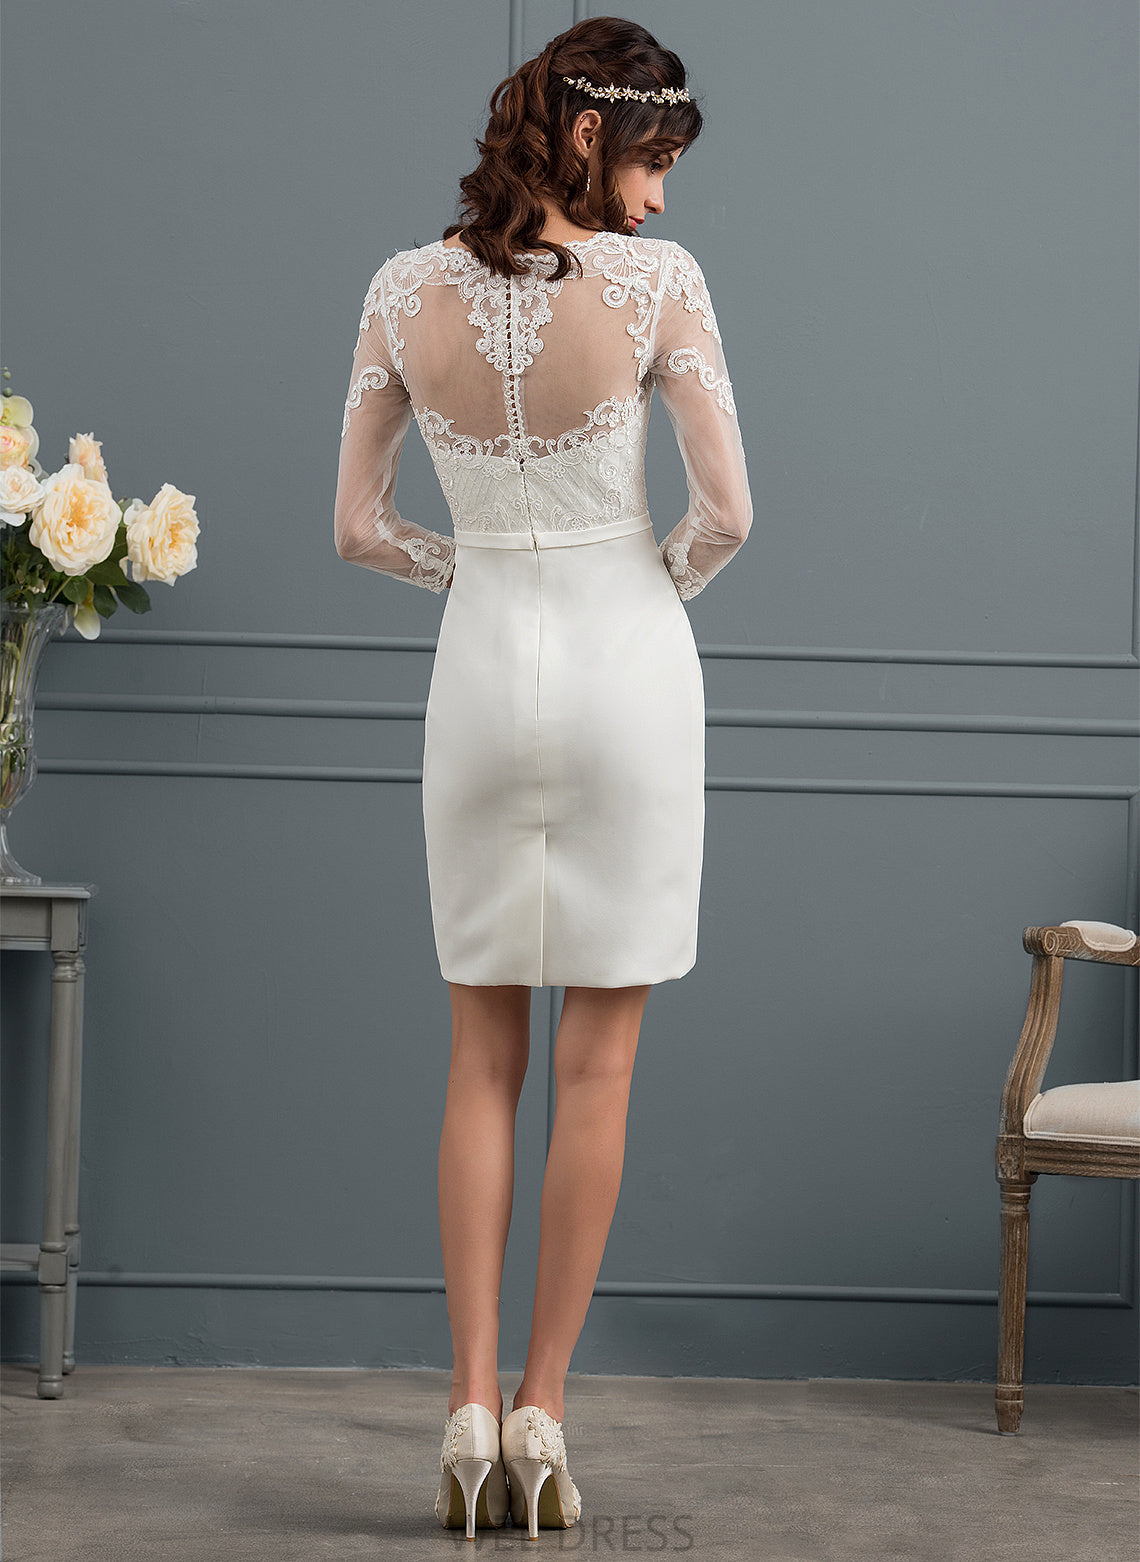 Illusion Bow(s) Sequins Dress Stretch Sheath/Column Wedding Dresses Crepe Wedding Hope Knee-Length With